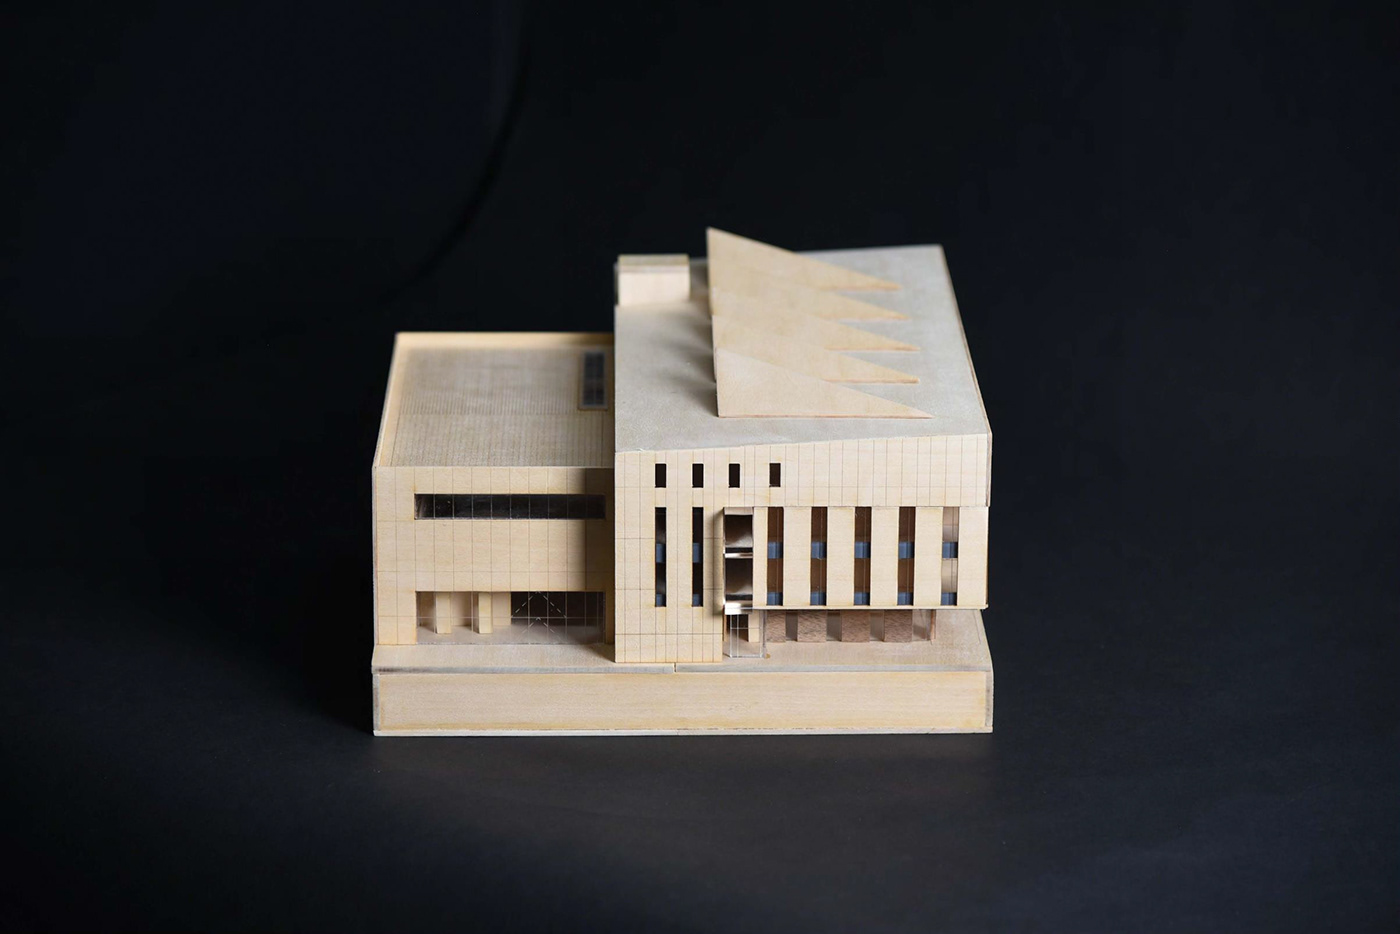 Model Making model architecture woodworking architectural model Workshop scale model building